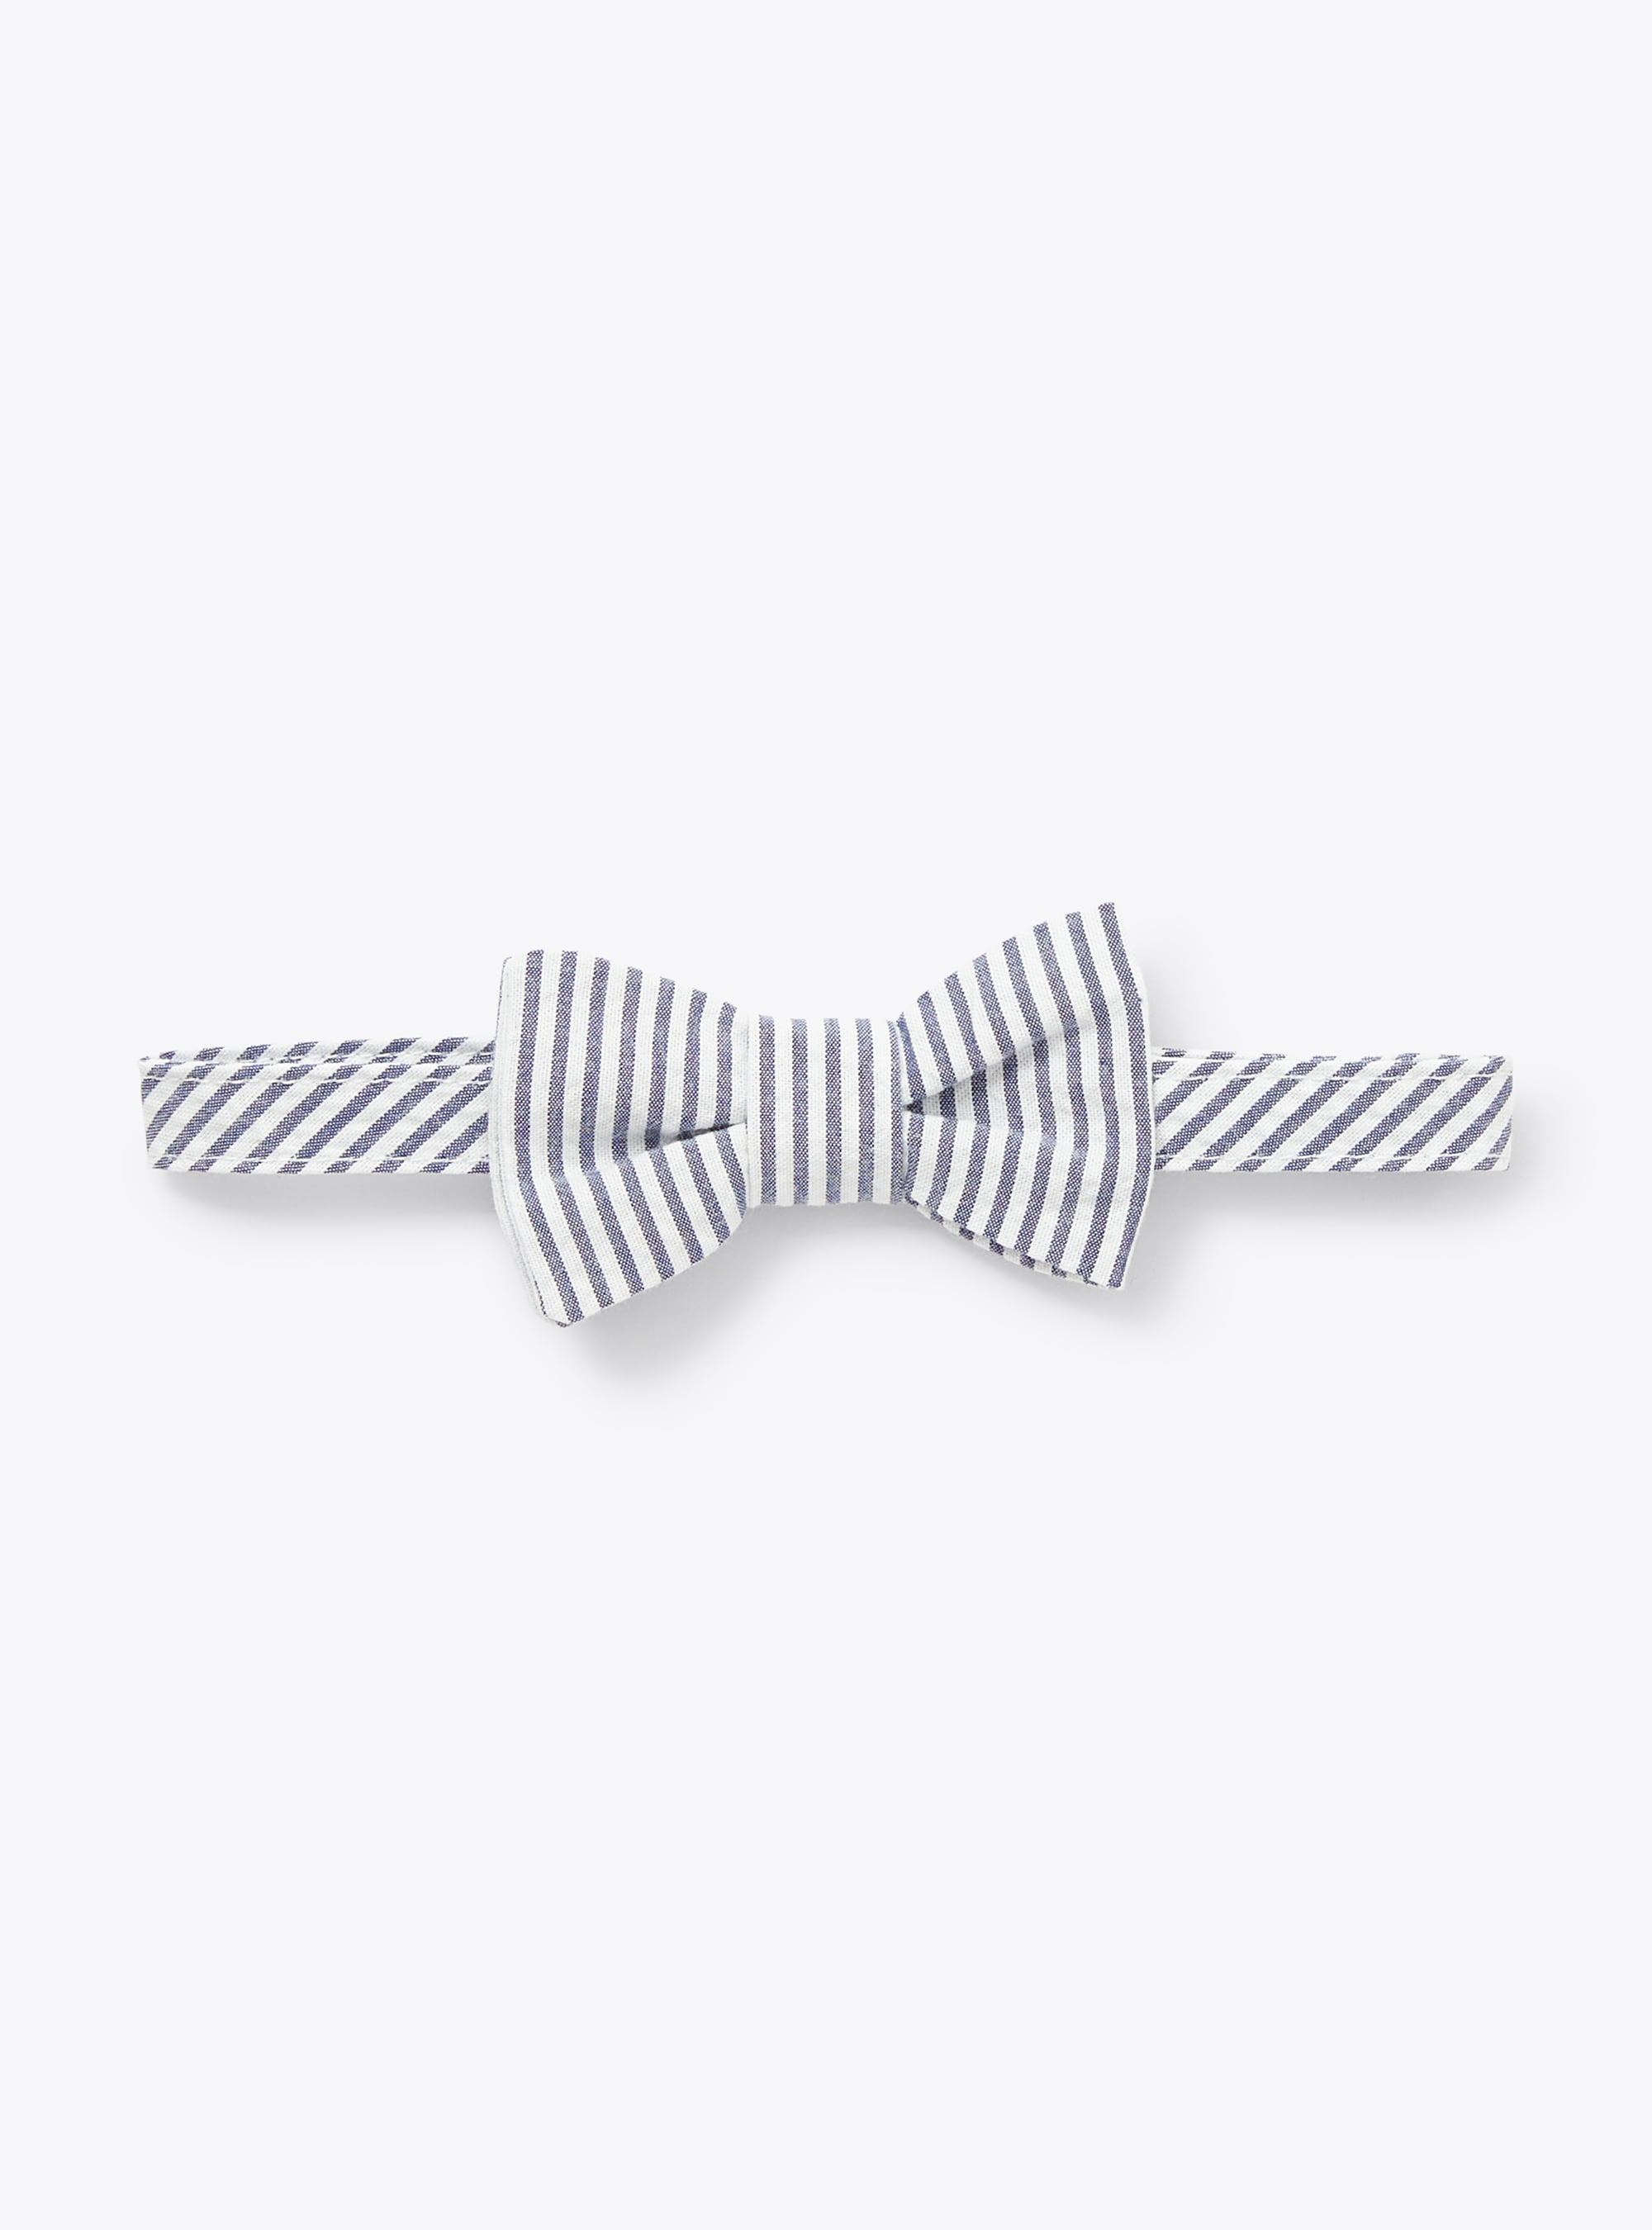 Bow tie in blue-&-white striped seersucker - Accessories - Il Gufo